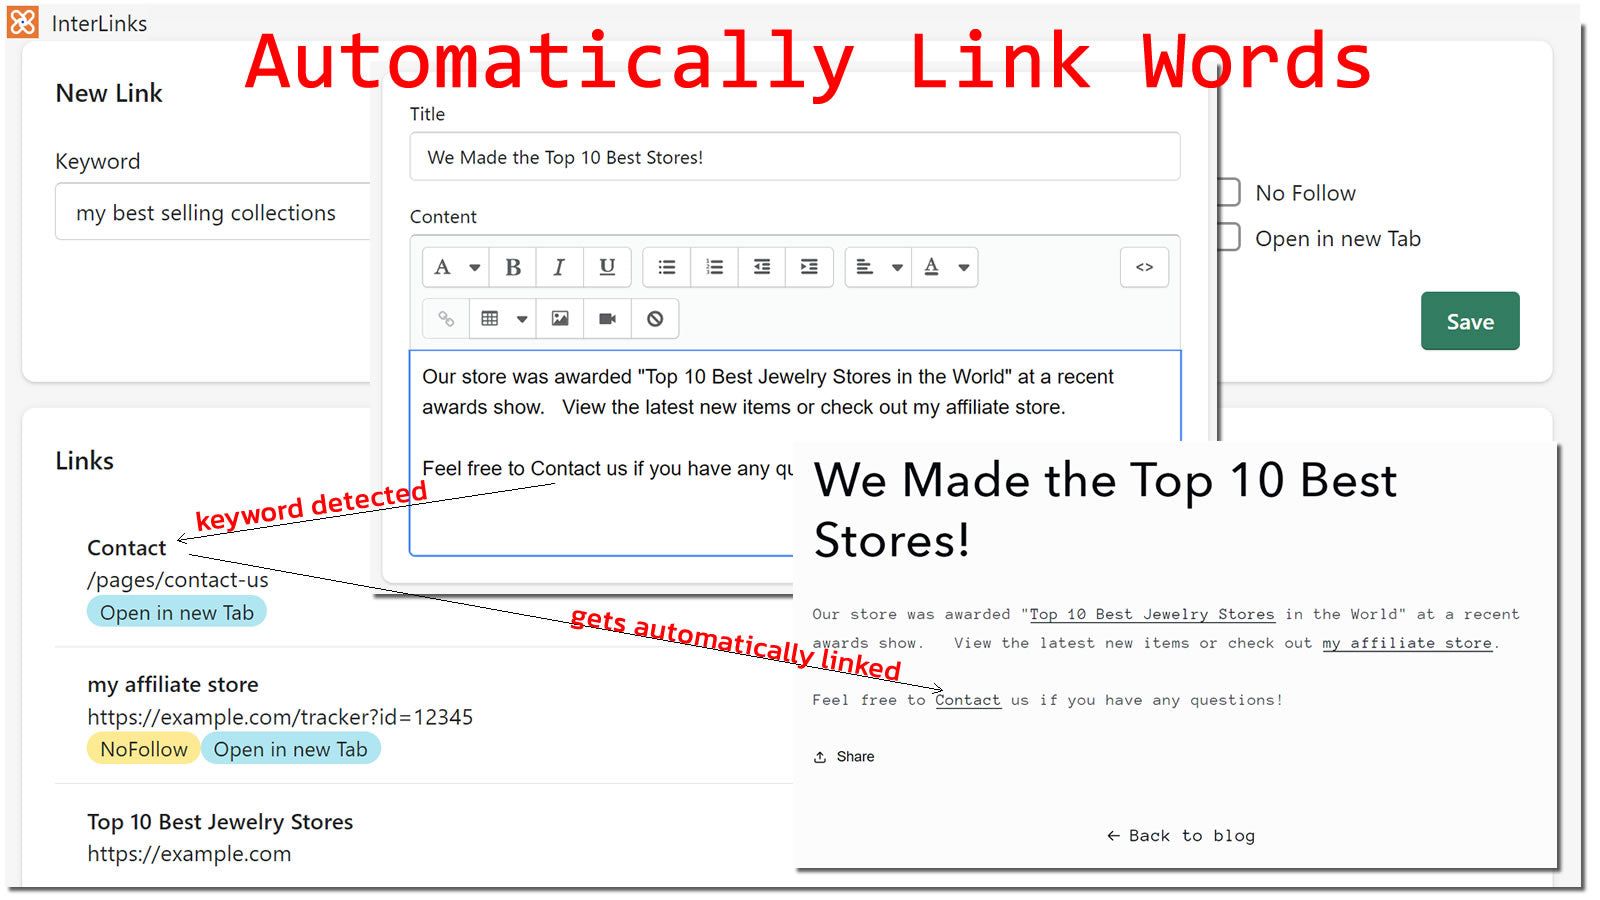 InterLinks Automatically Links - Illustrative Image